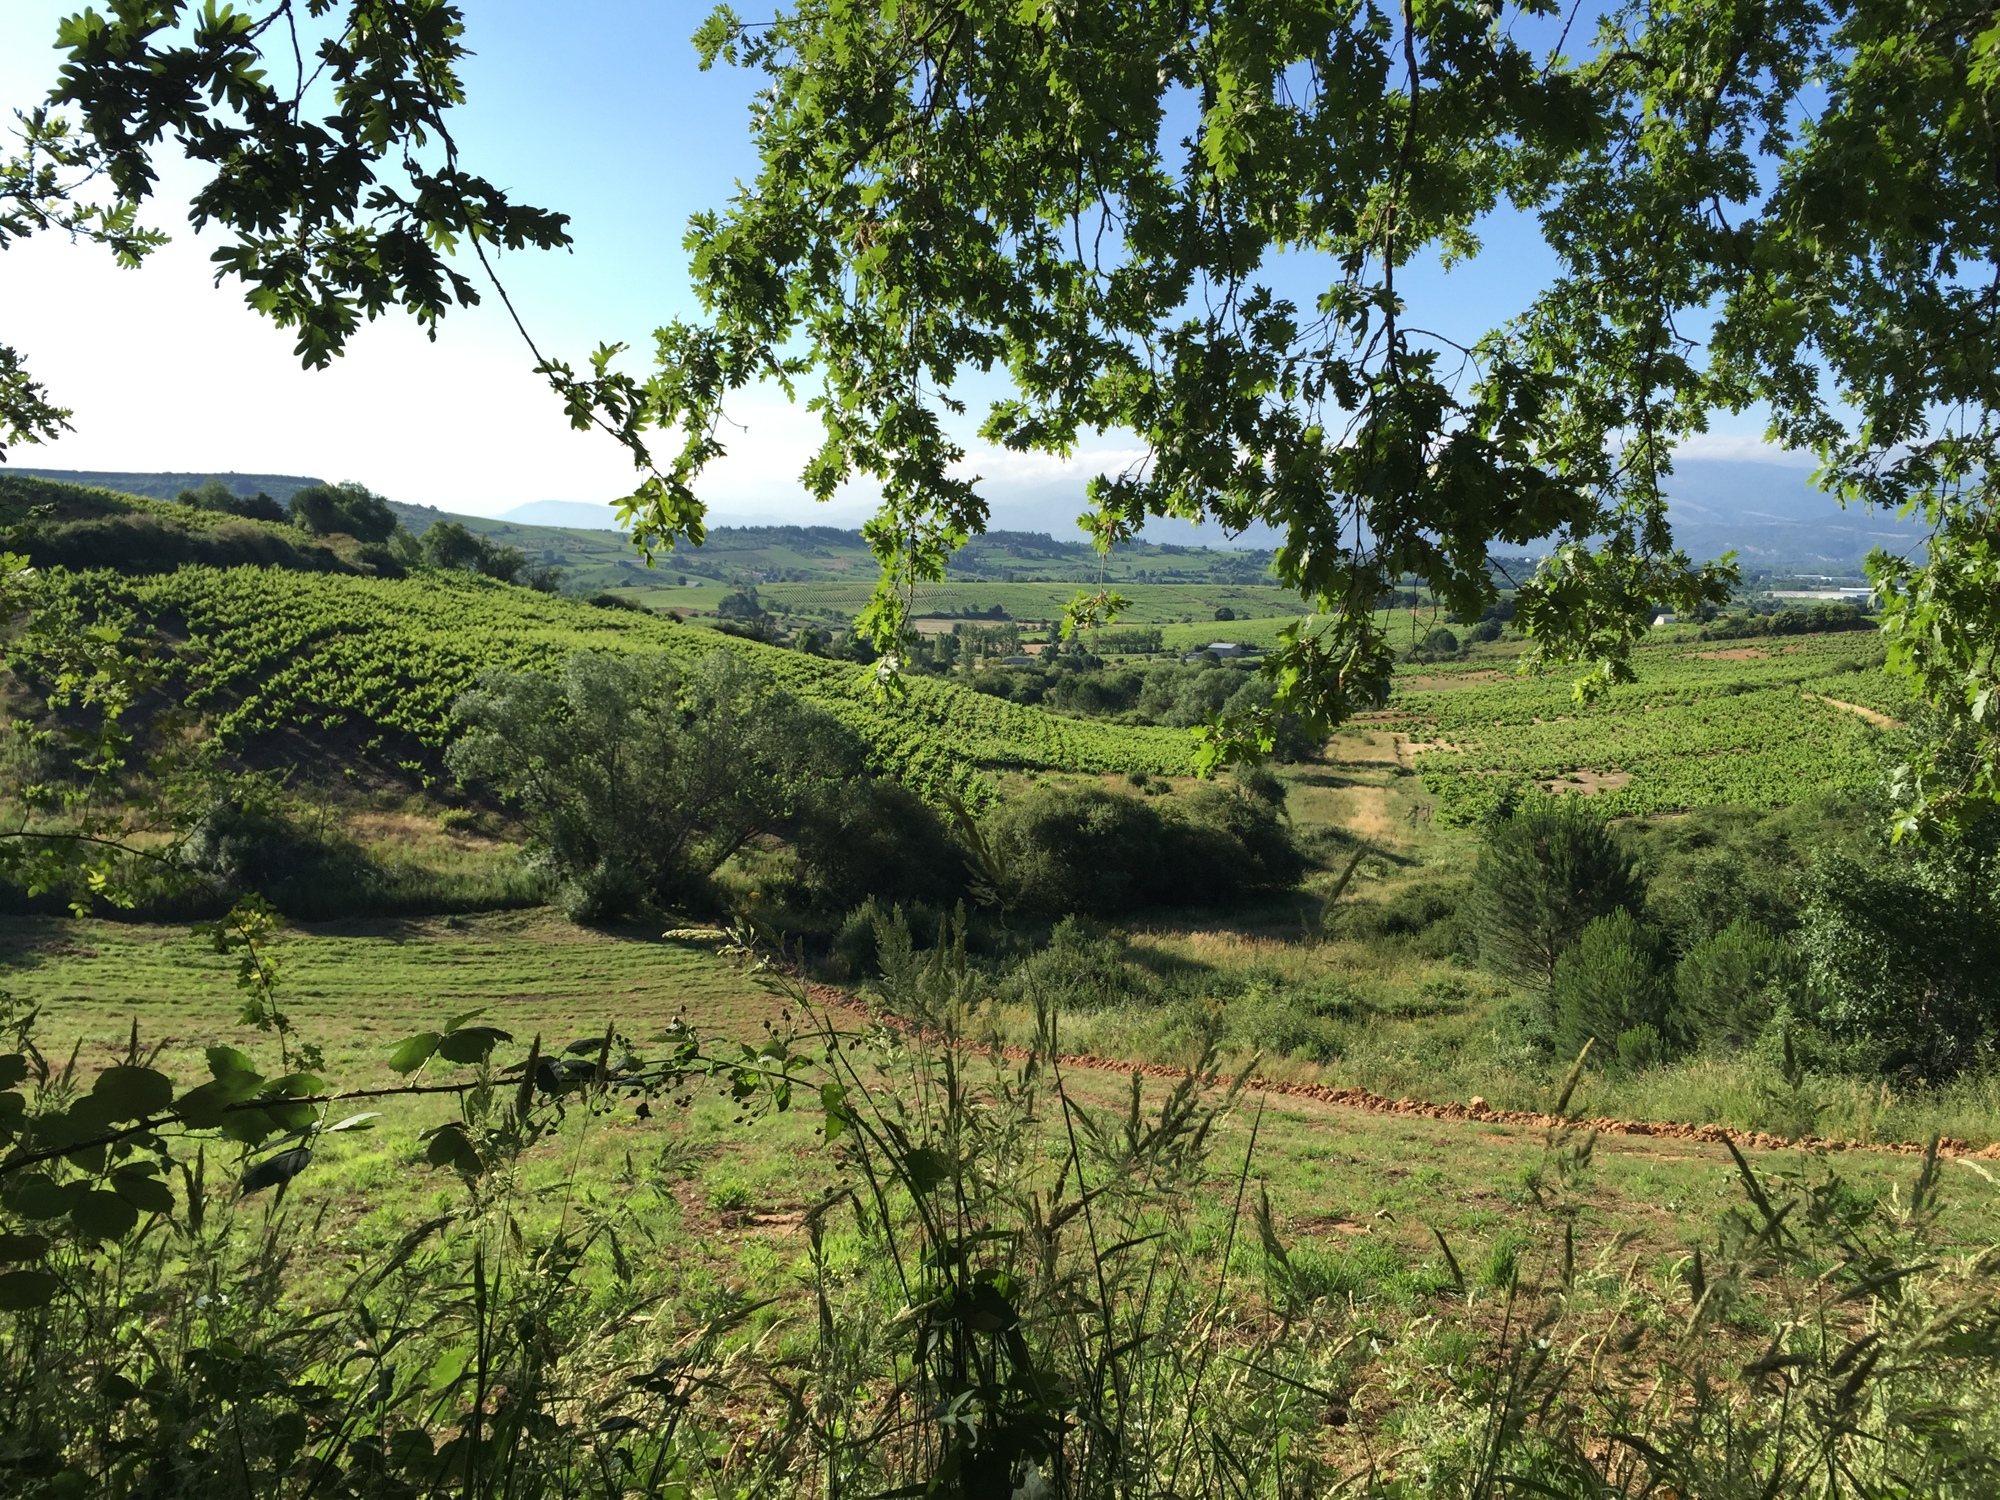 Courtesy. A vineyard view seen during Eleni Sokos' hike in Spain. 